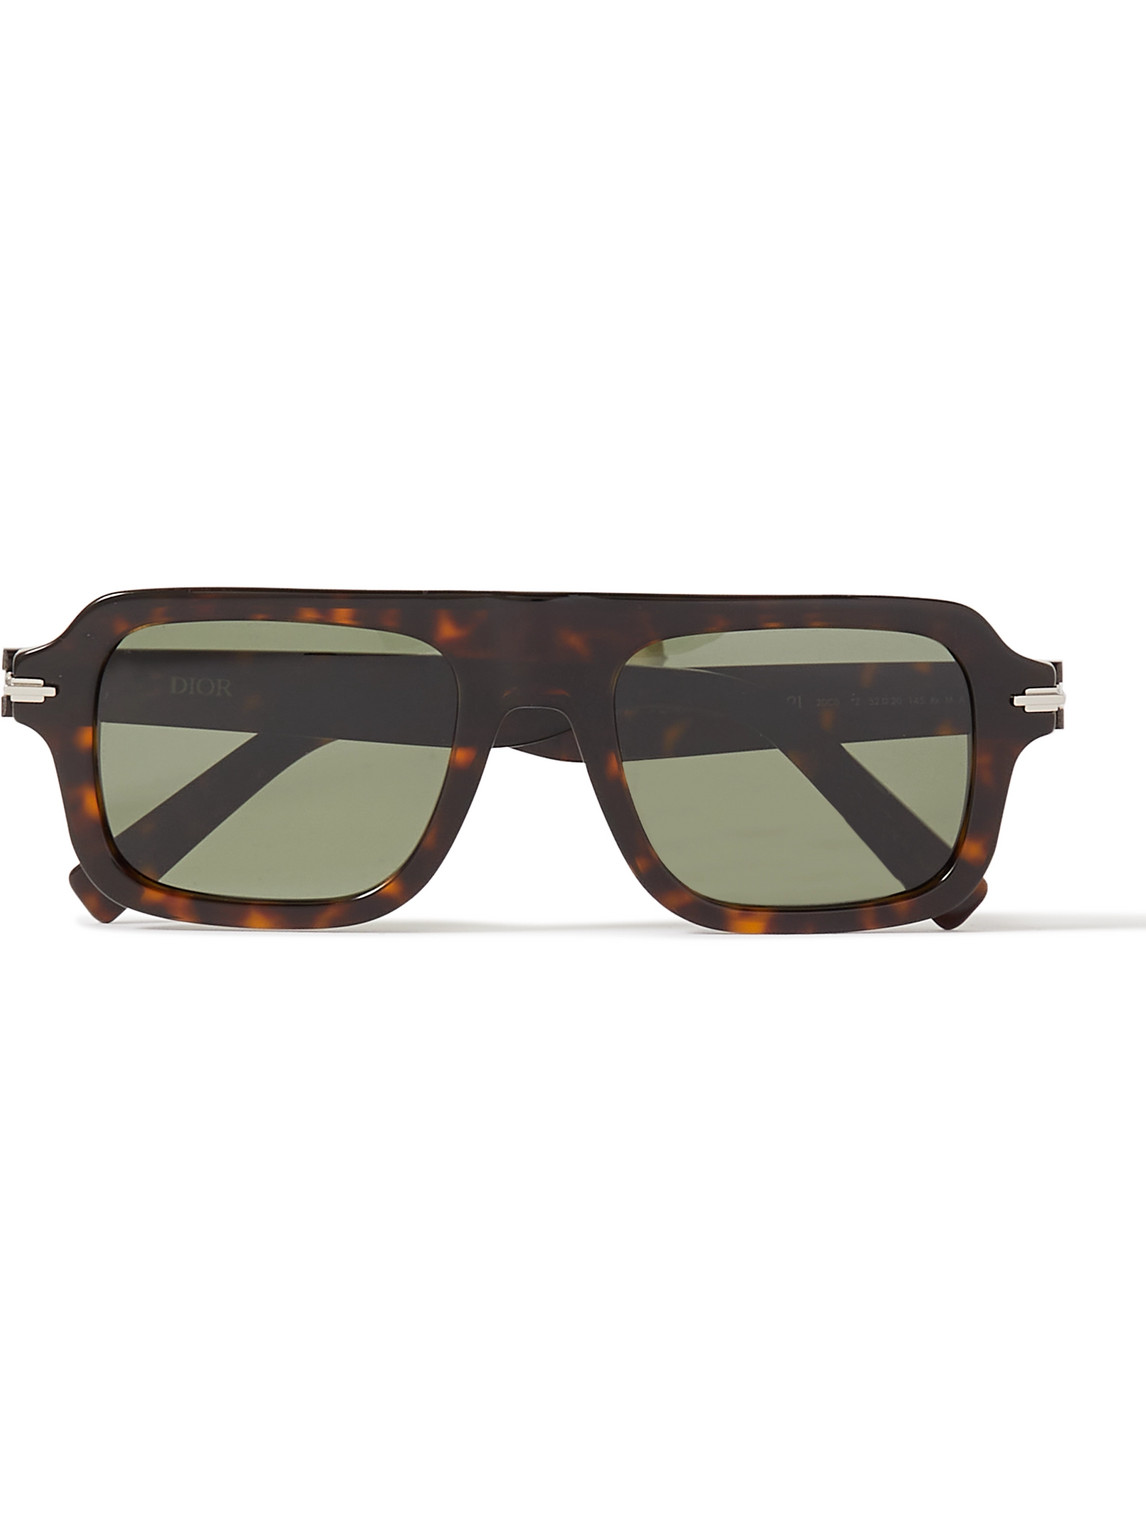 Dior Blacksuit N2i Square-frame Tortoiseshell Acetate Sunglasses